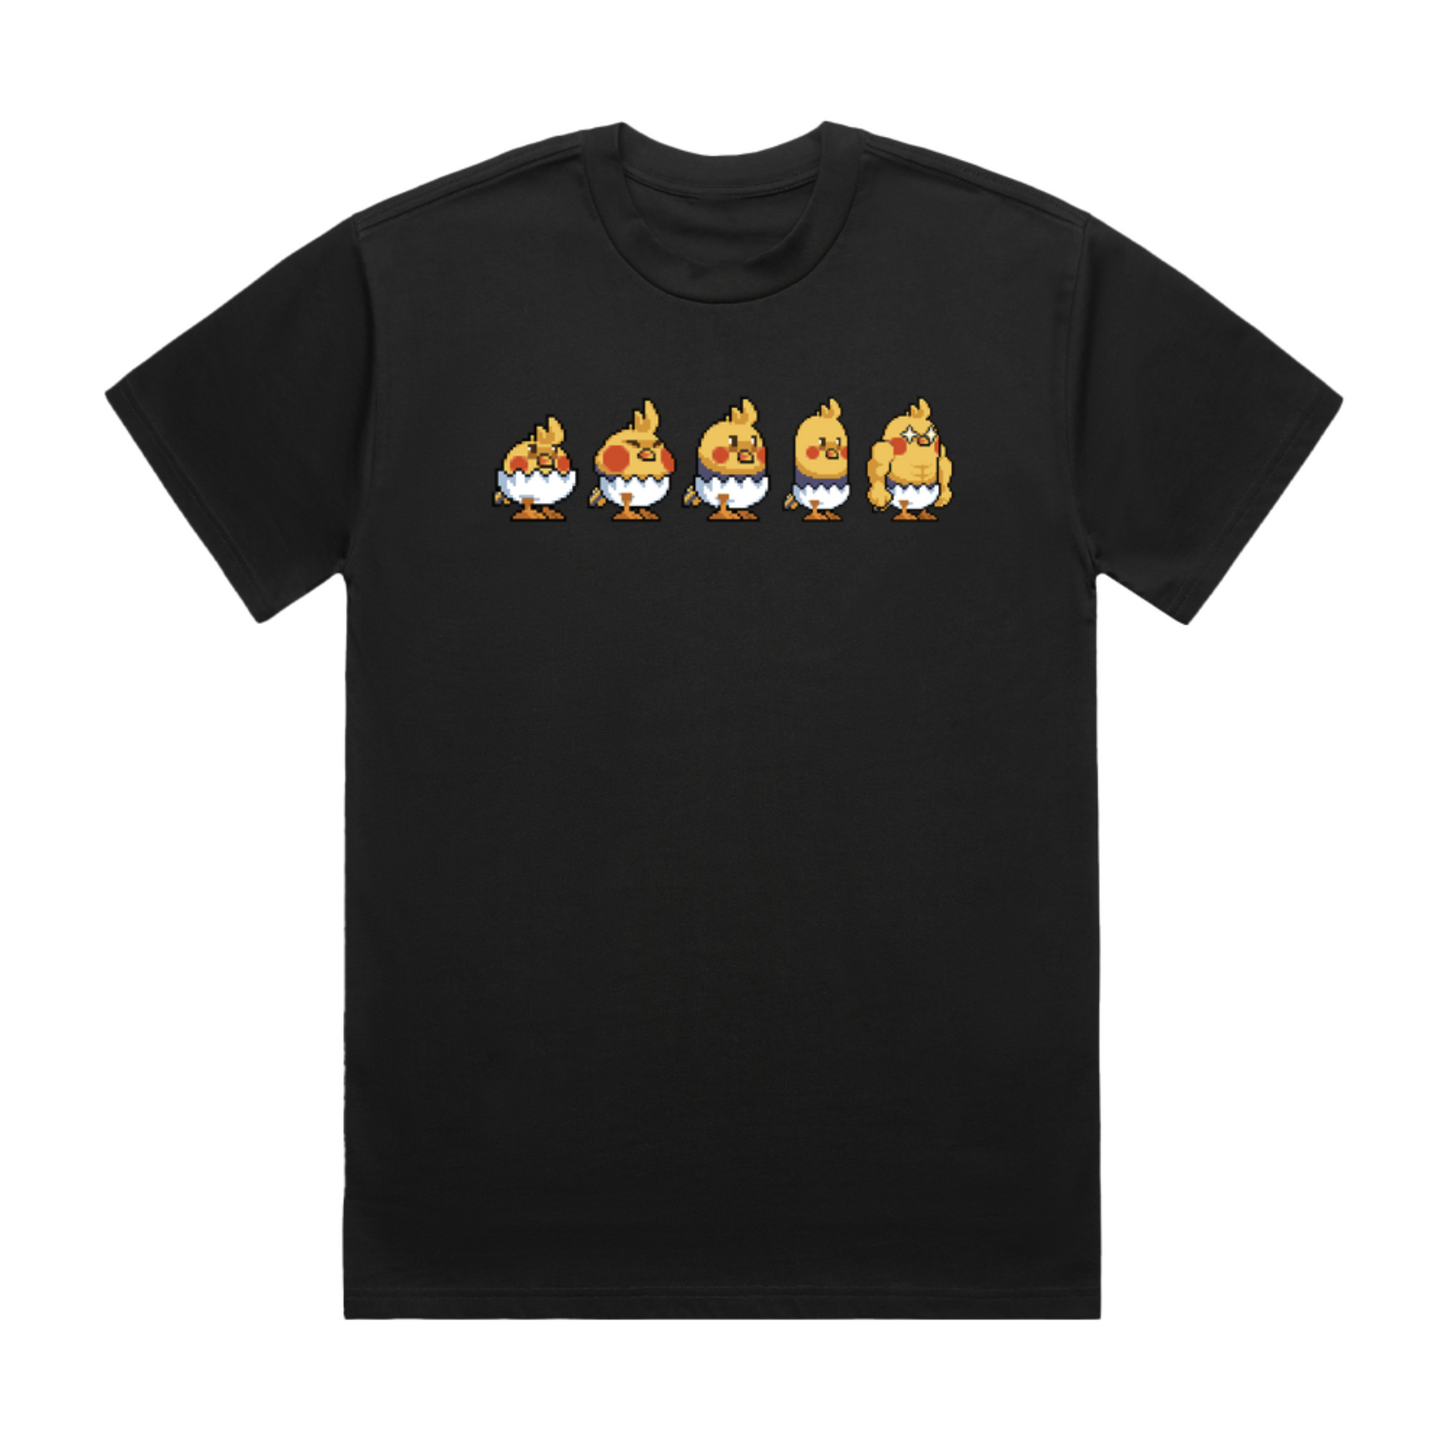 Auteru Chirplings Assemble! T-Shirt